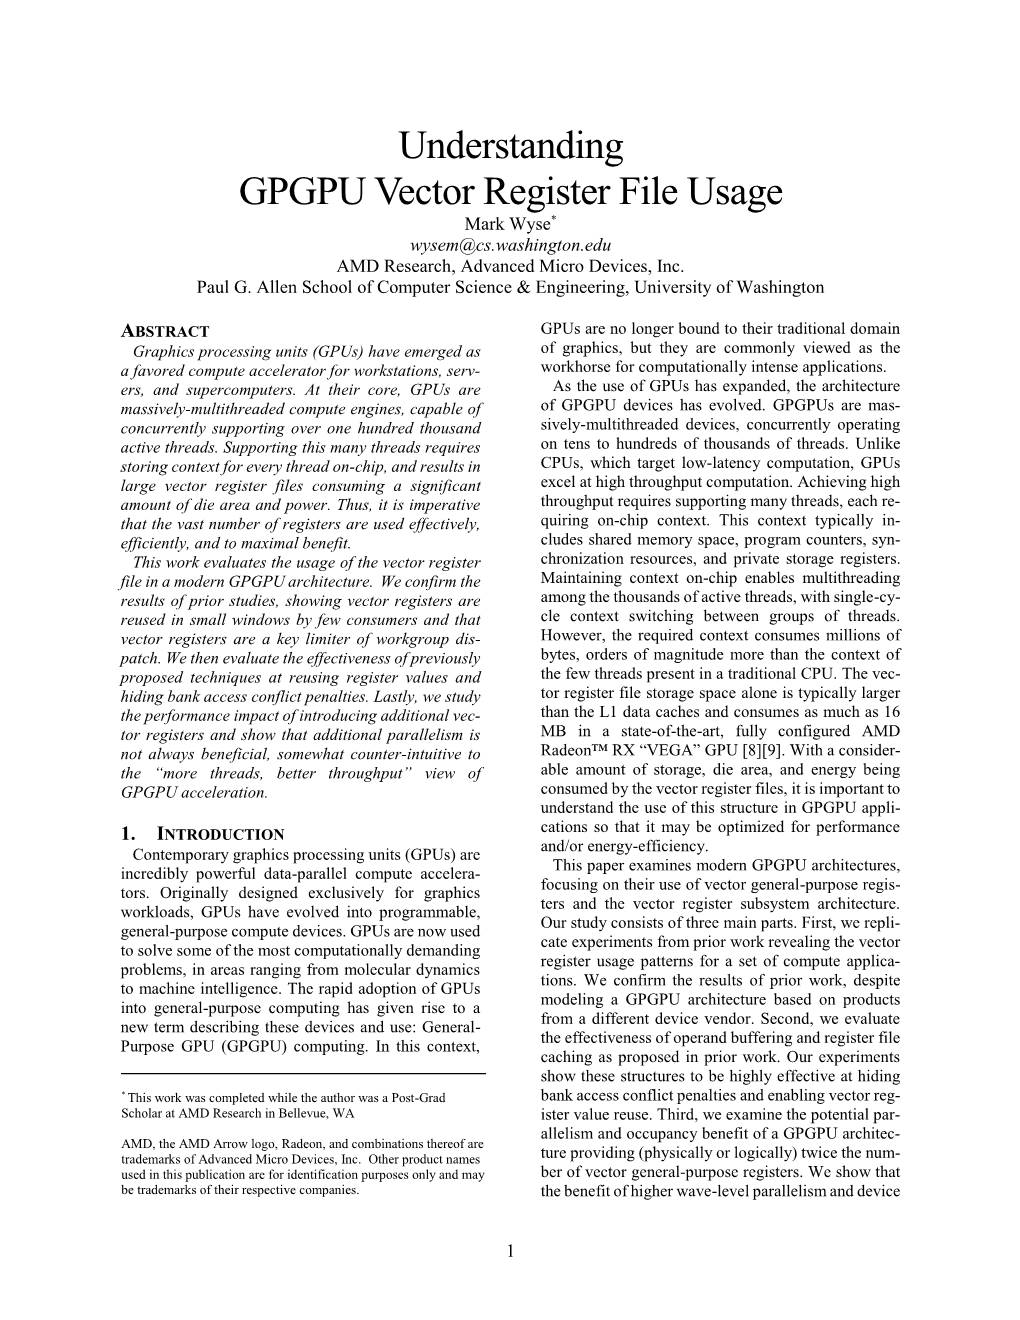 Understanding GPGPU Vector Register File Usage Mark Wyse* Wysem@Cs.Washington.Edu AMD Research, Advanced Micro Devices, Inc